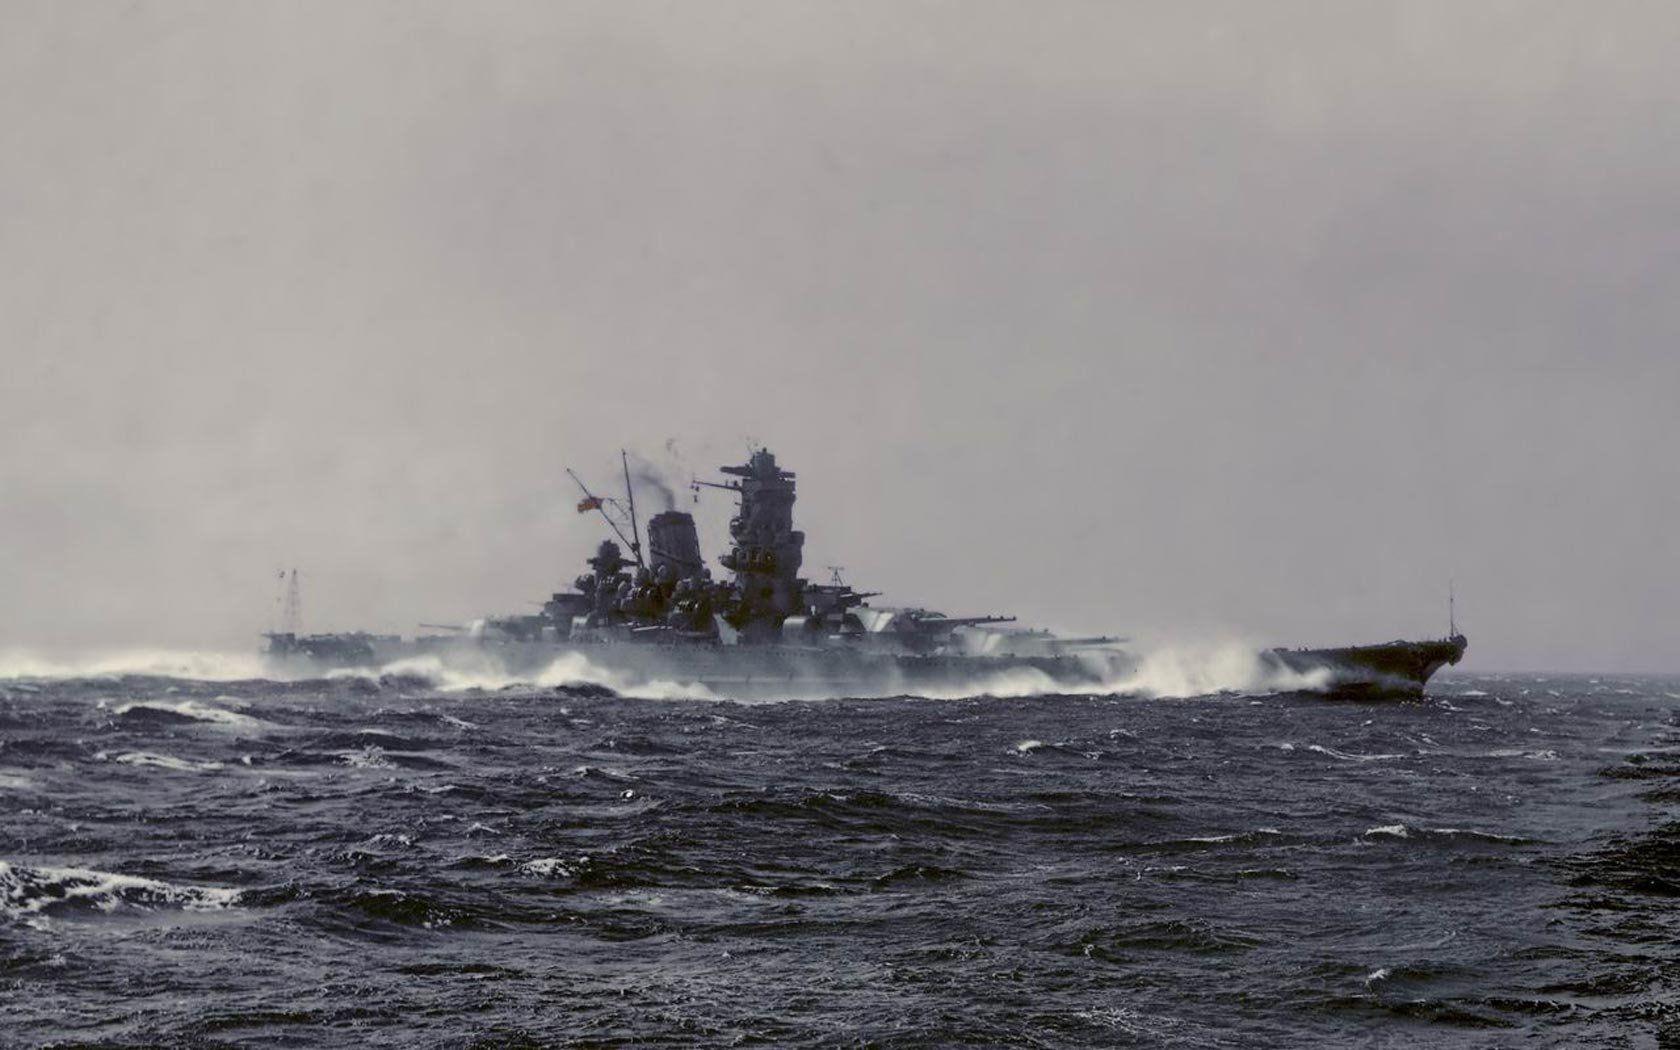 Battleship HD Wallpaper and Background Image